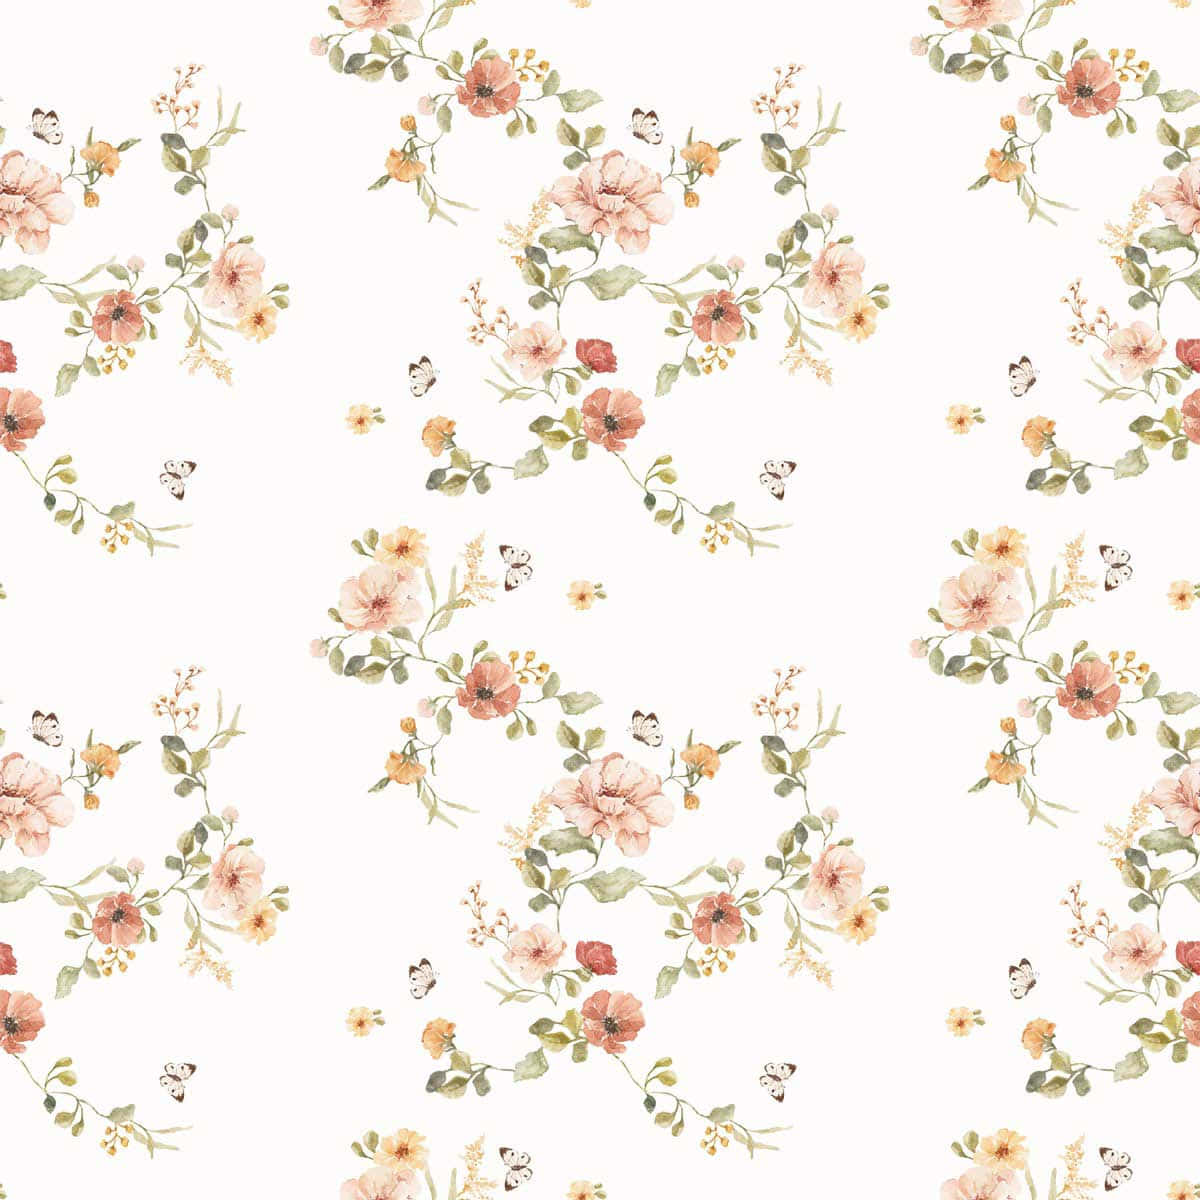 A Delicate Vintage Flower Wallpaper